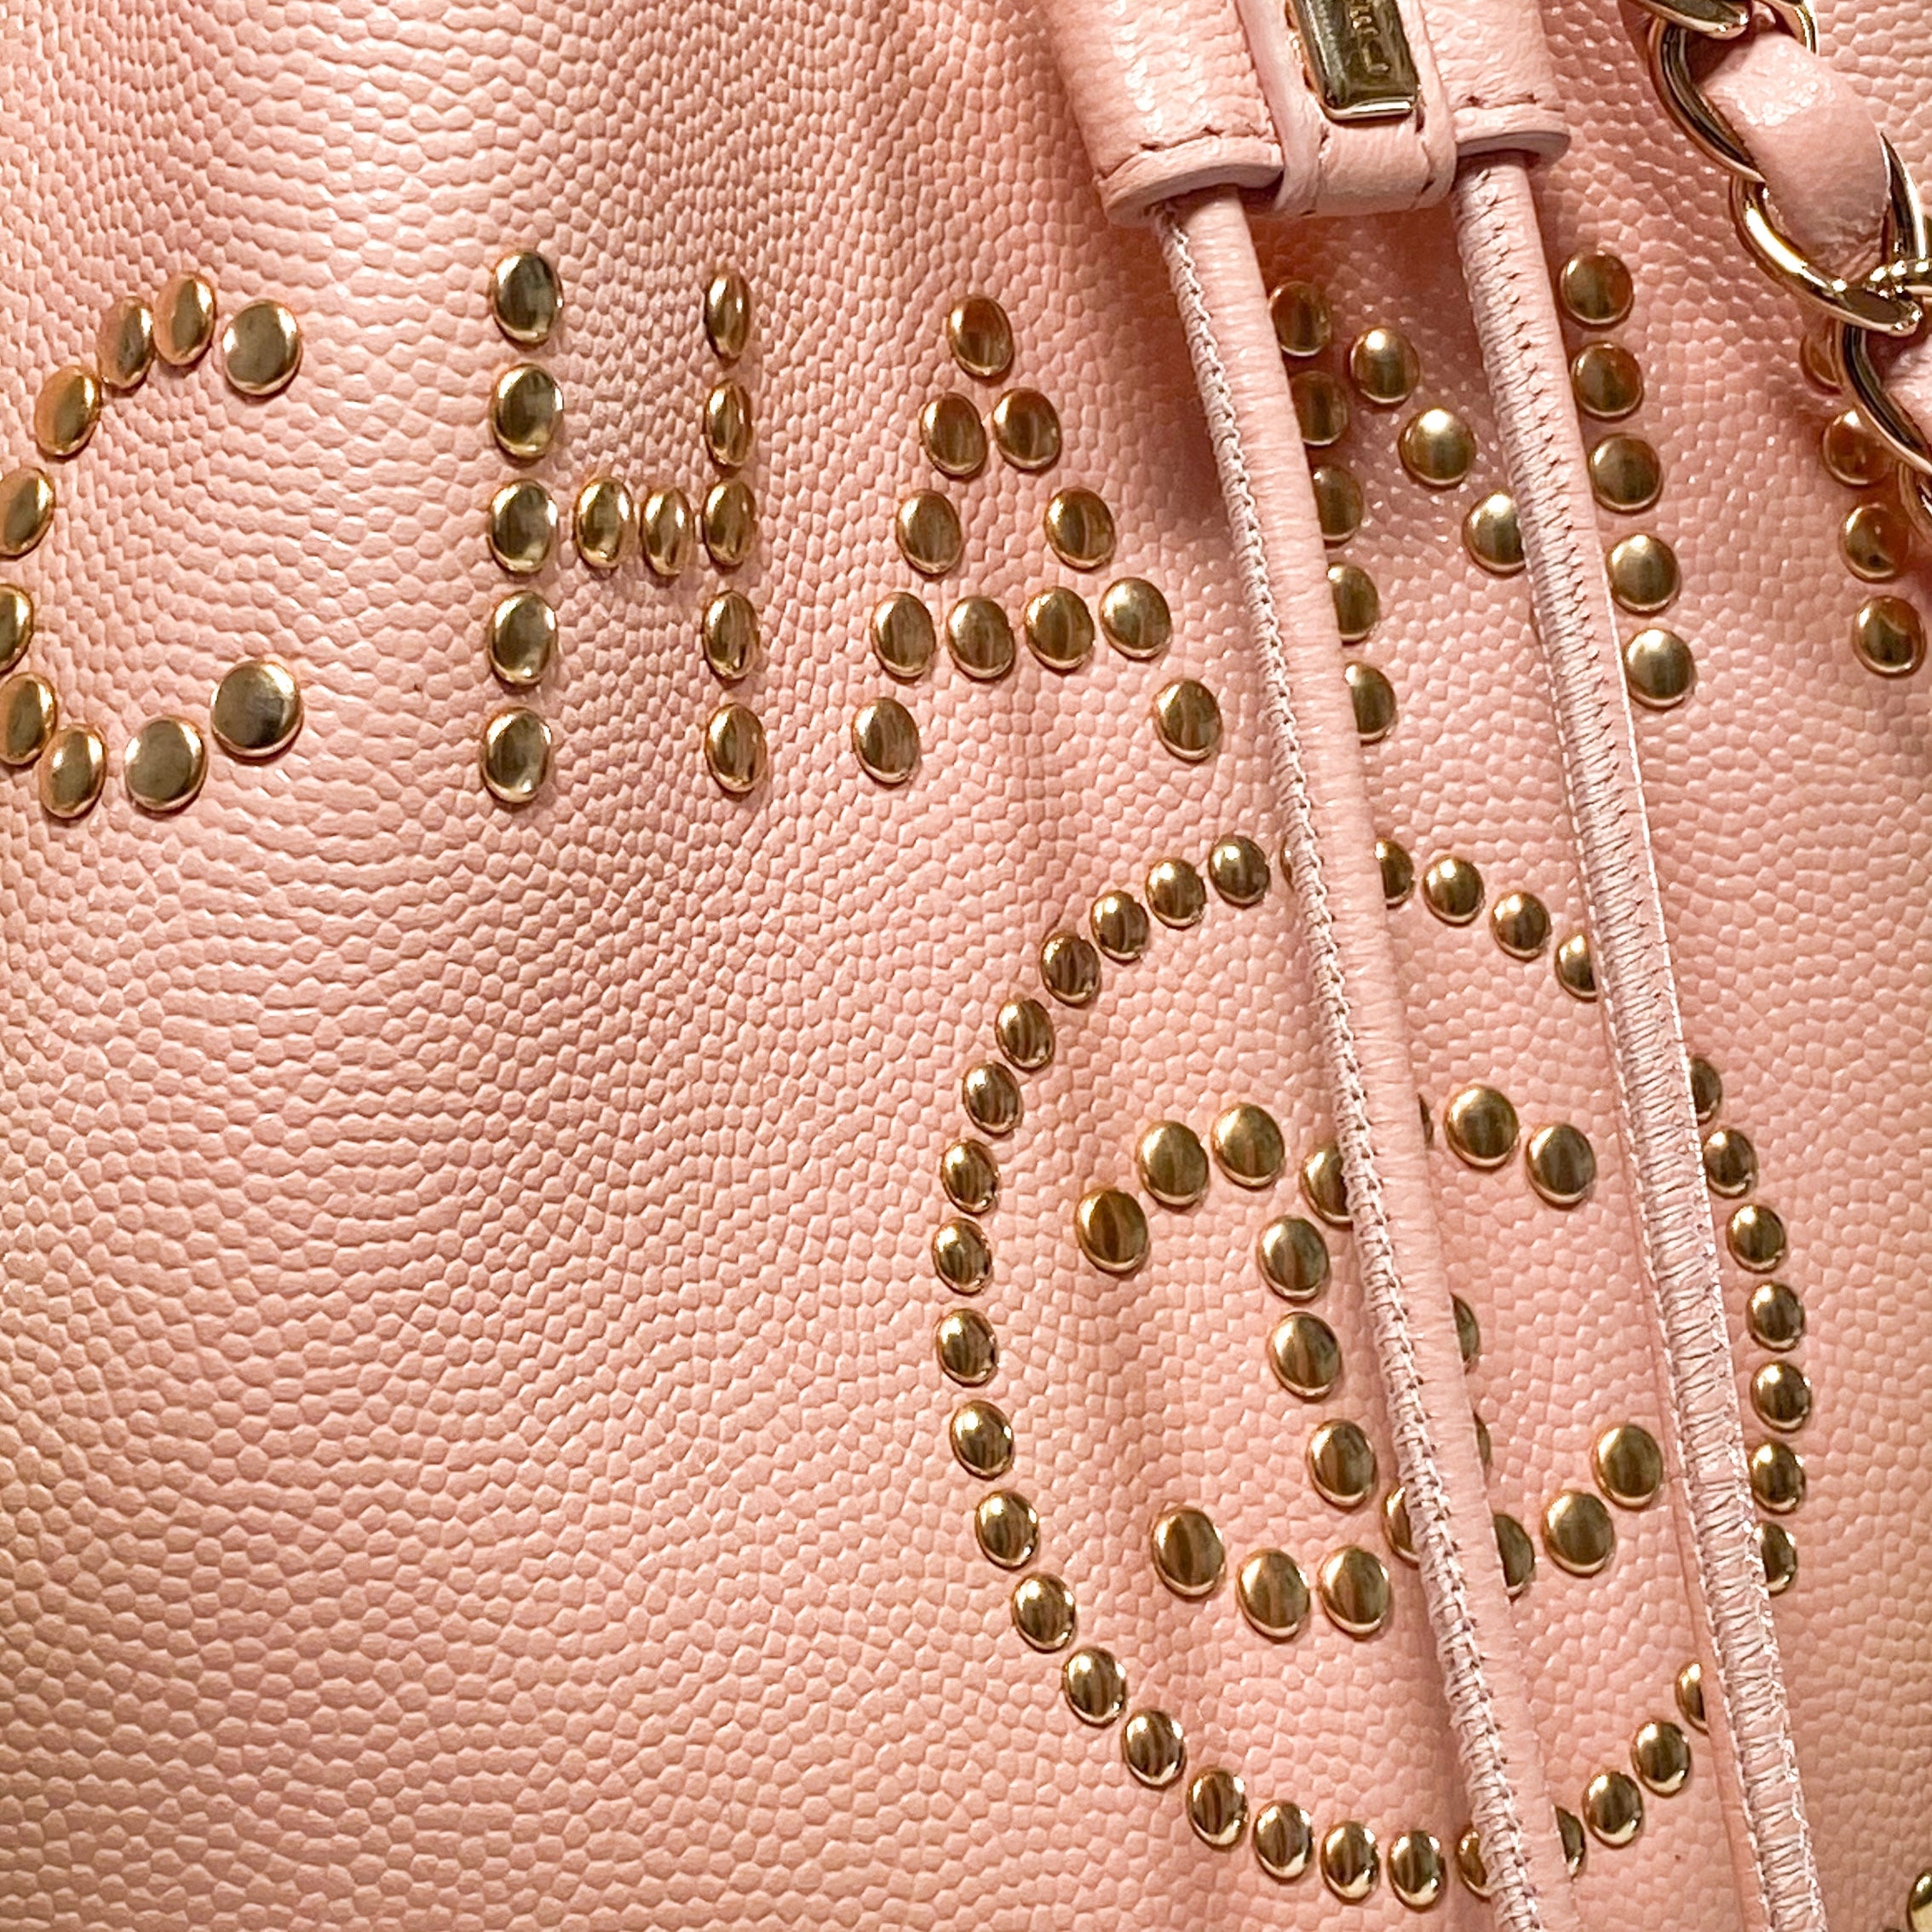 Chanel Light Pink Caviar Deauville Drawstring Bucket Bag